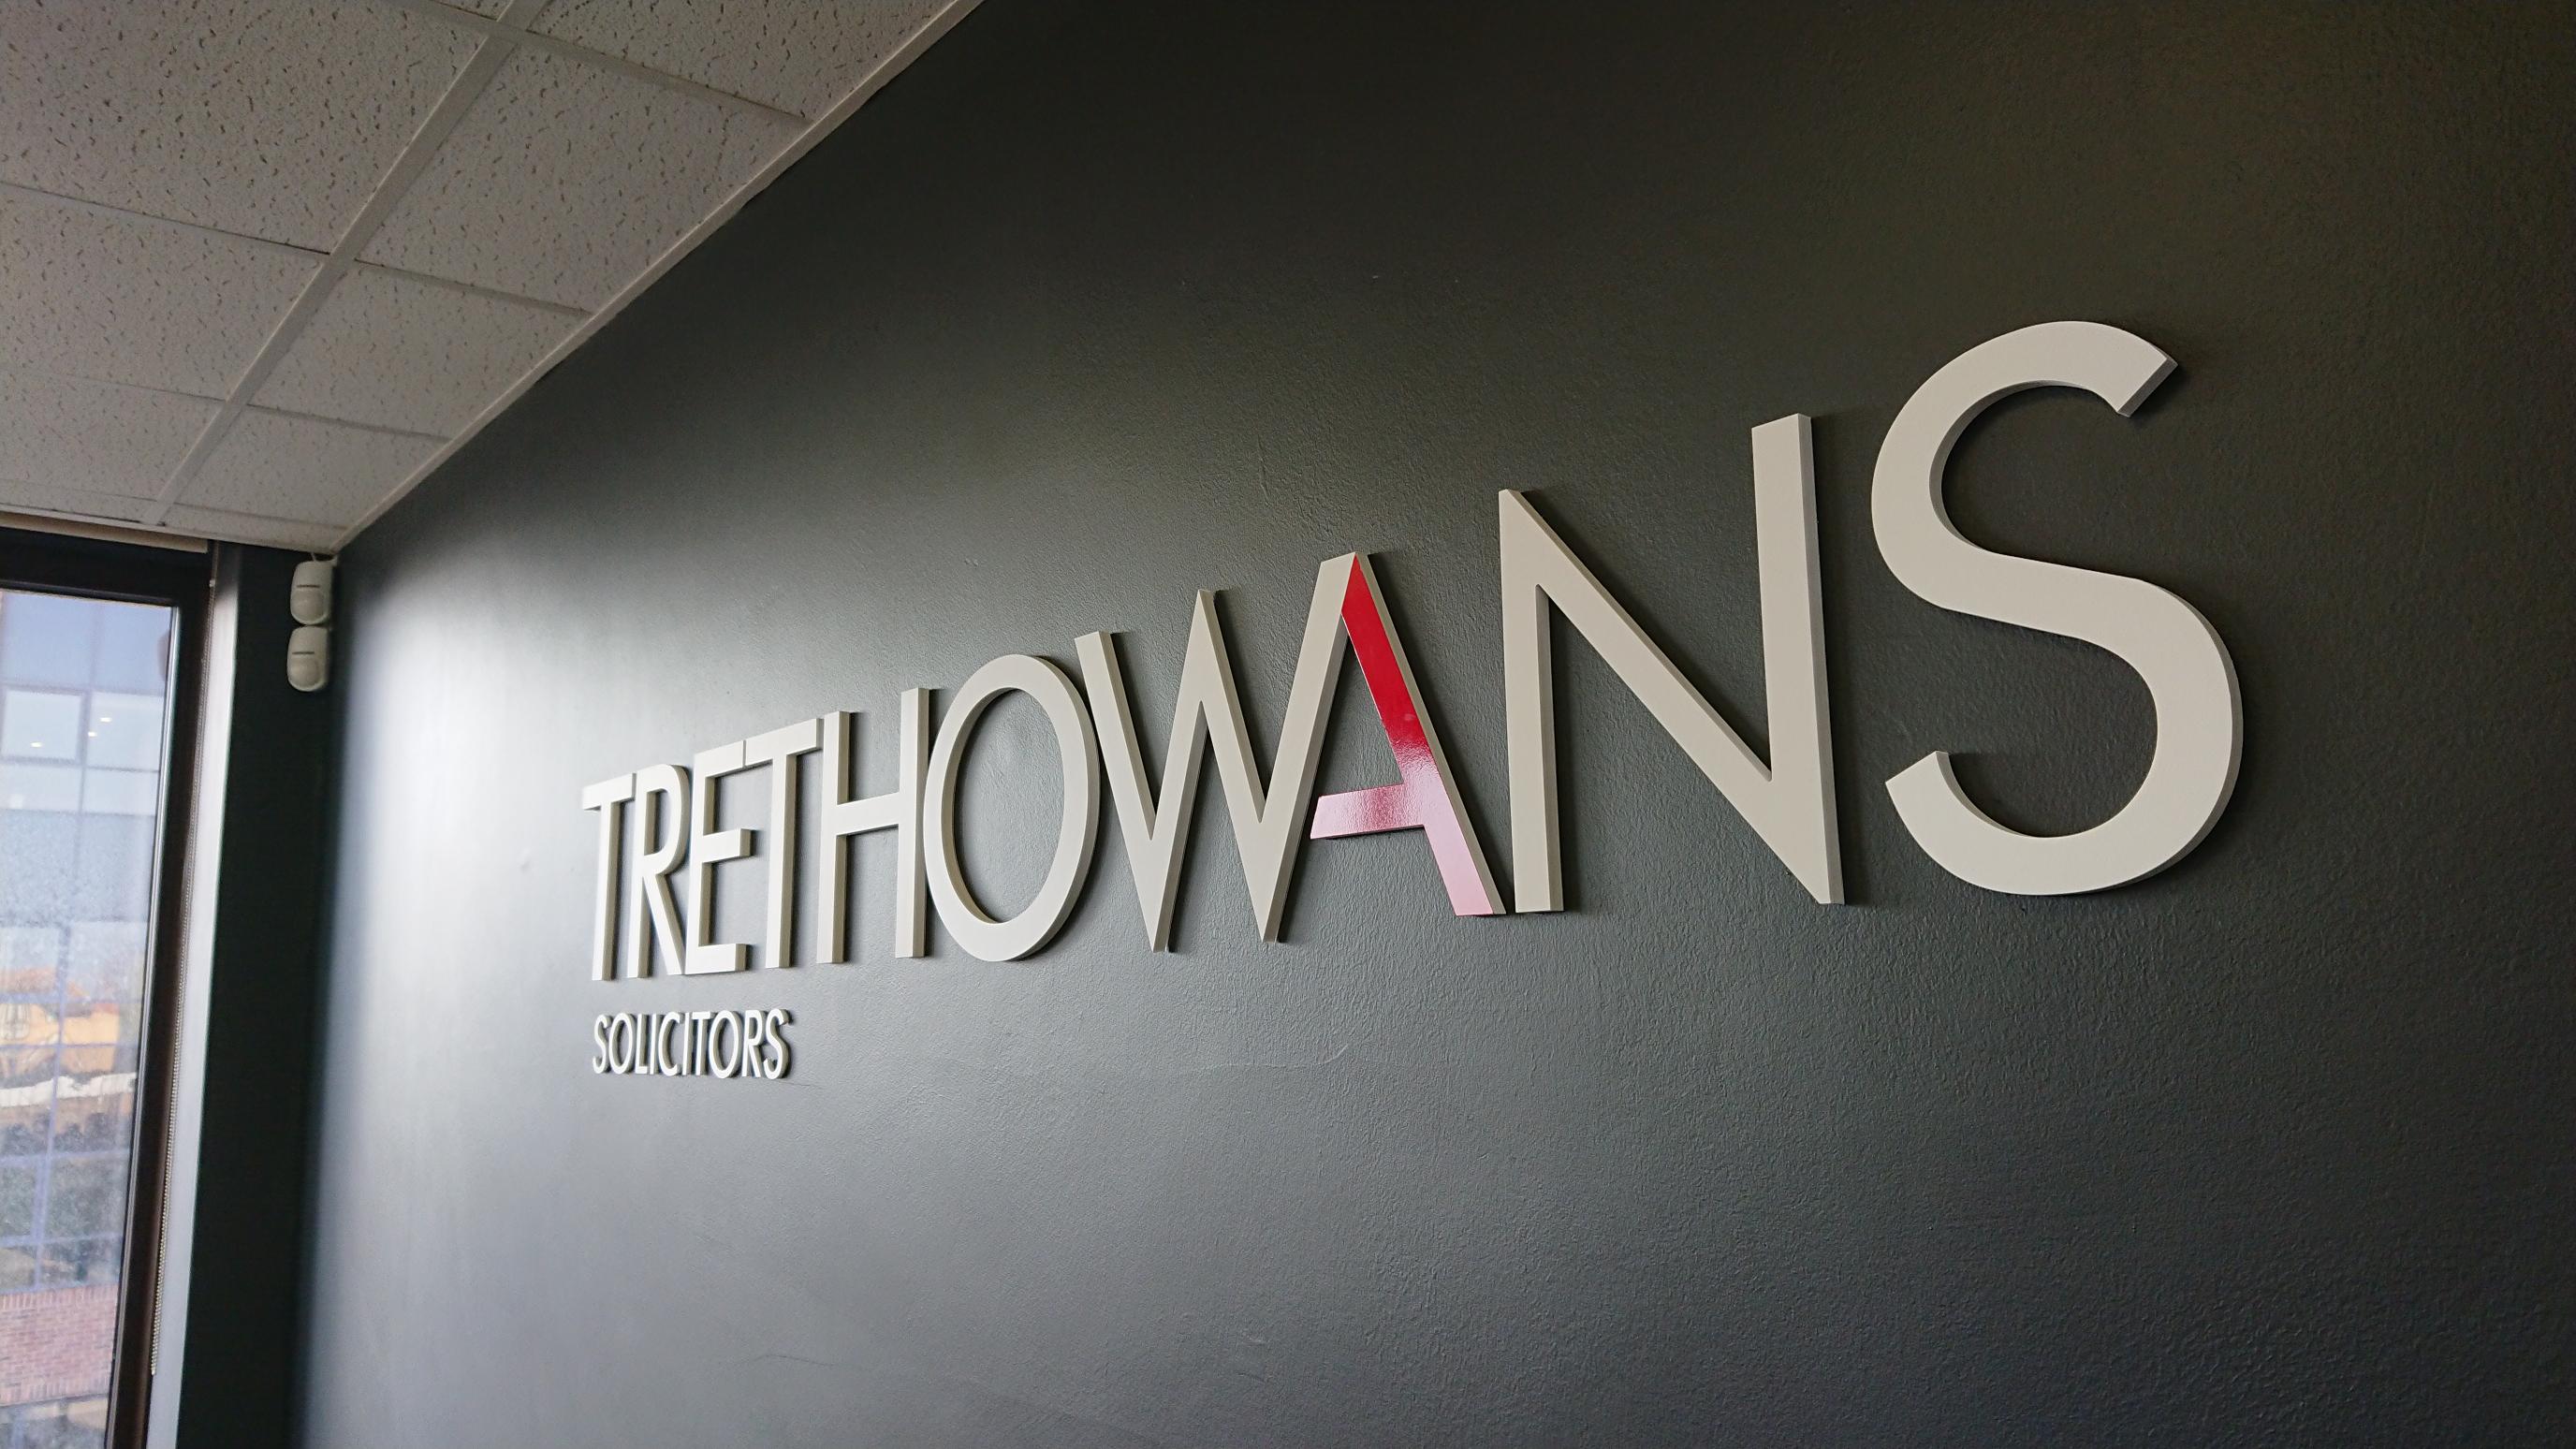 Trethowans business sign